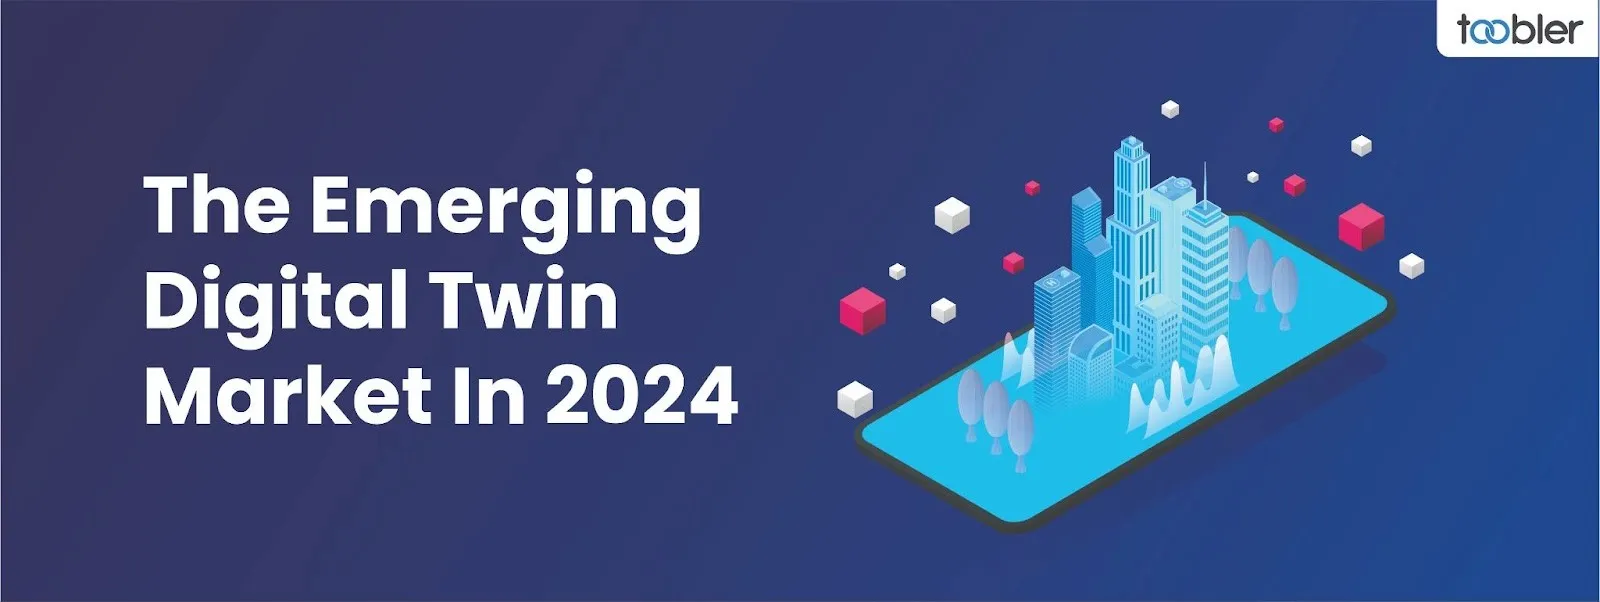 The Emerging Digital Twin Market In 2024